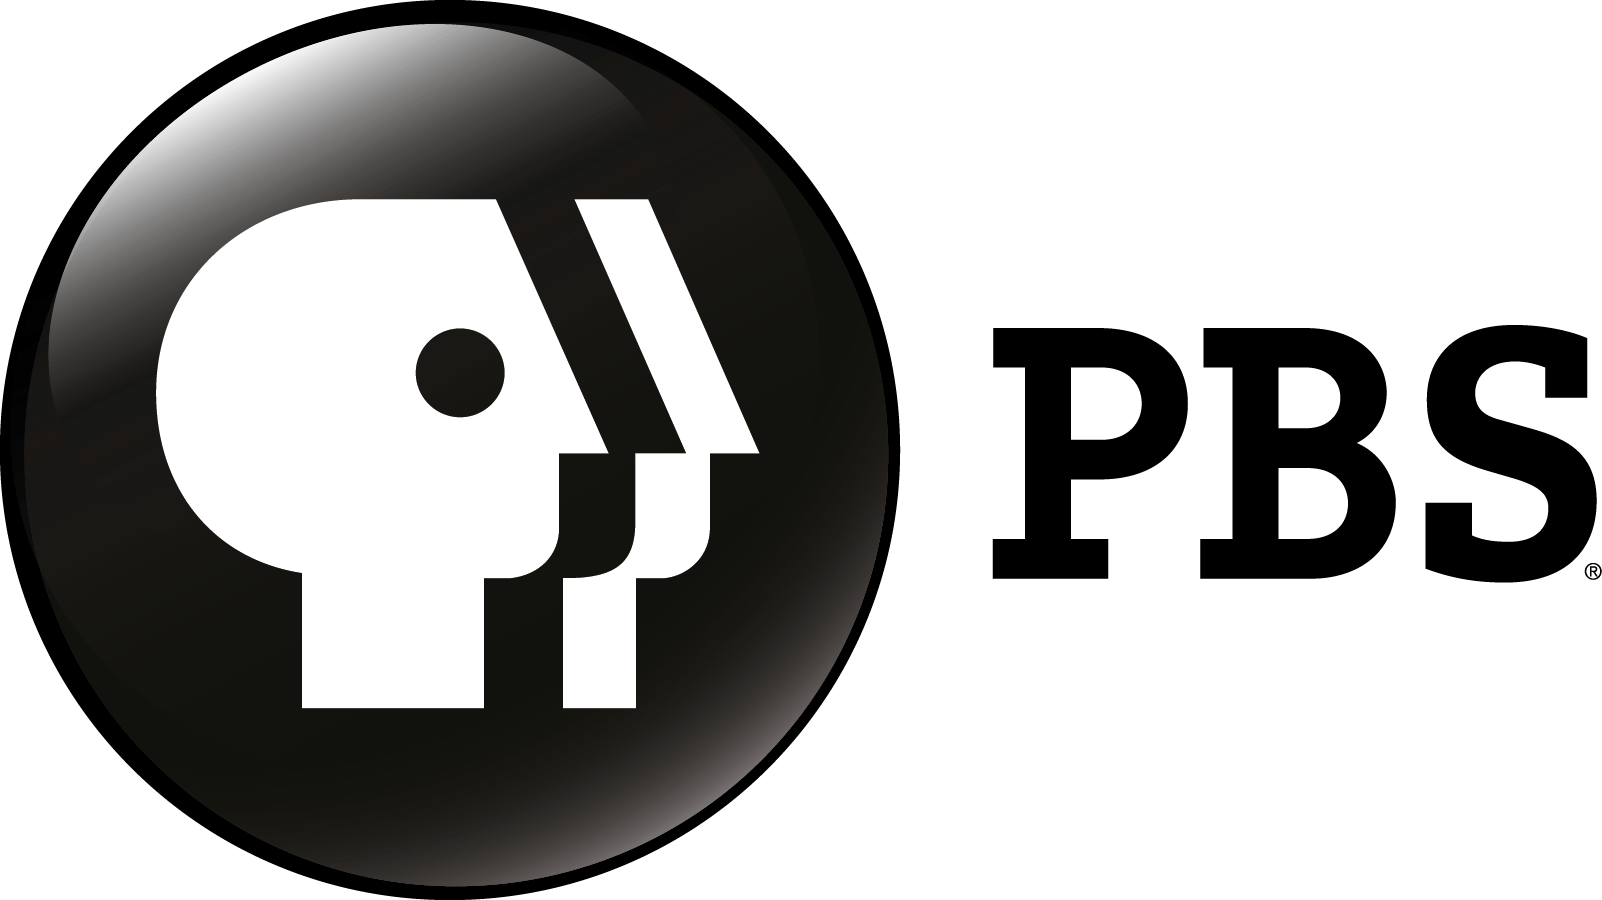 PBS - Public Broadcasting Service Logo [AI-PDF]